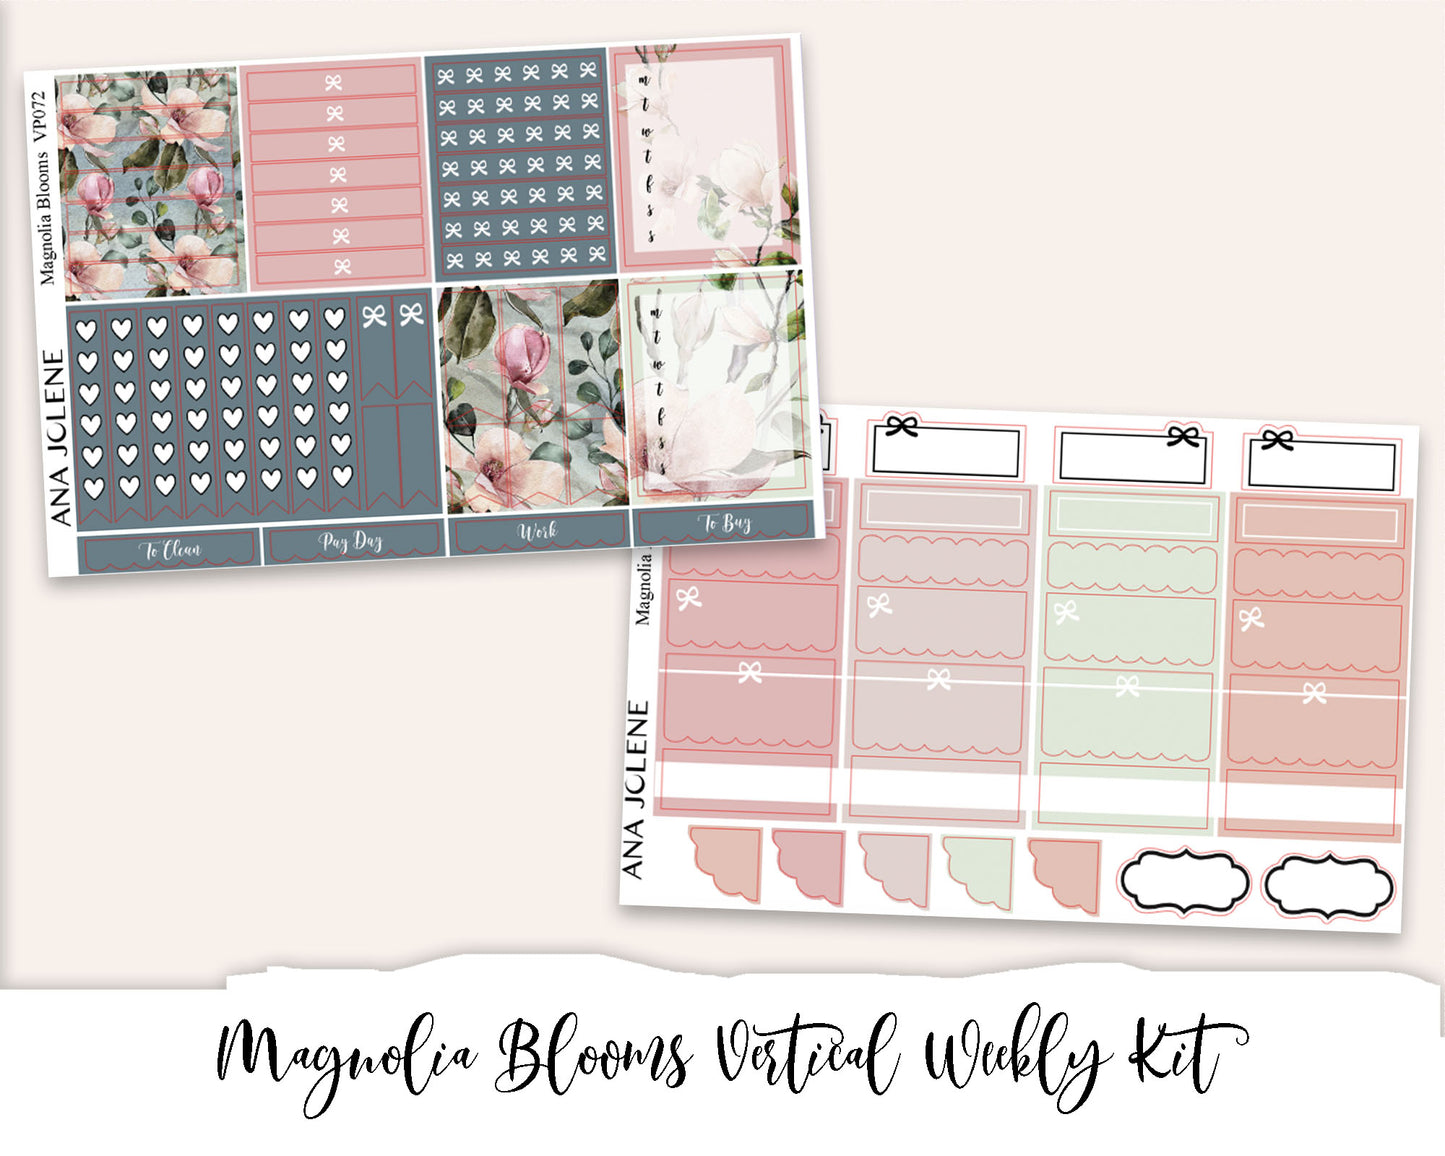 MAGNOLIA BLOOMS Planner Sticker Kit (Vertical Weekly)